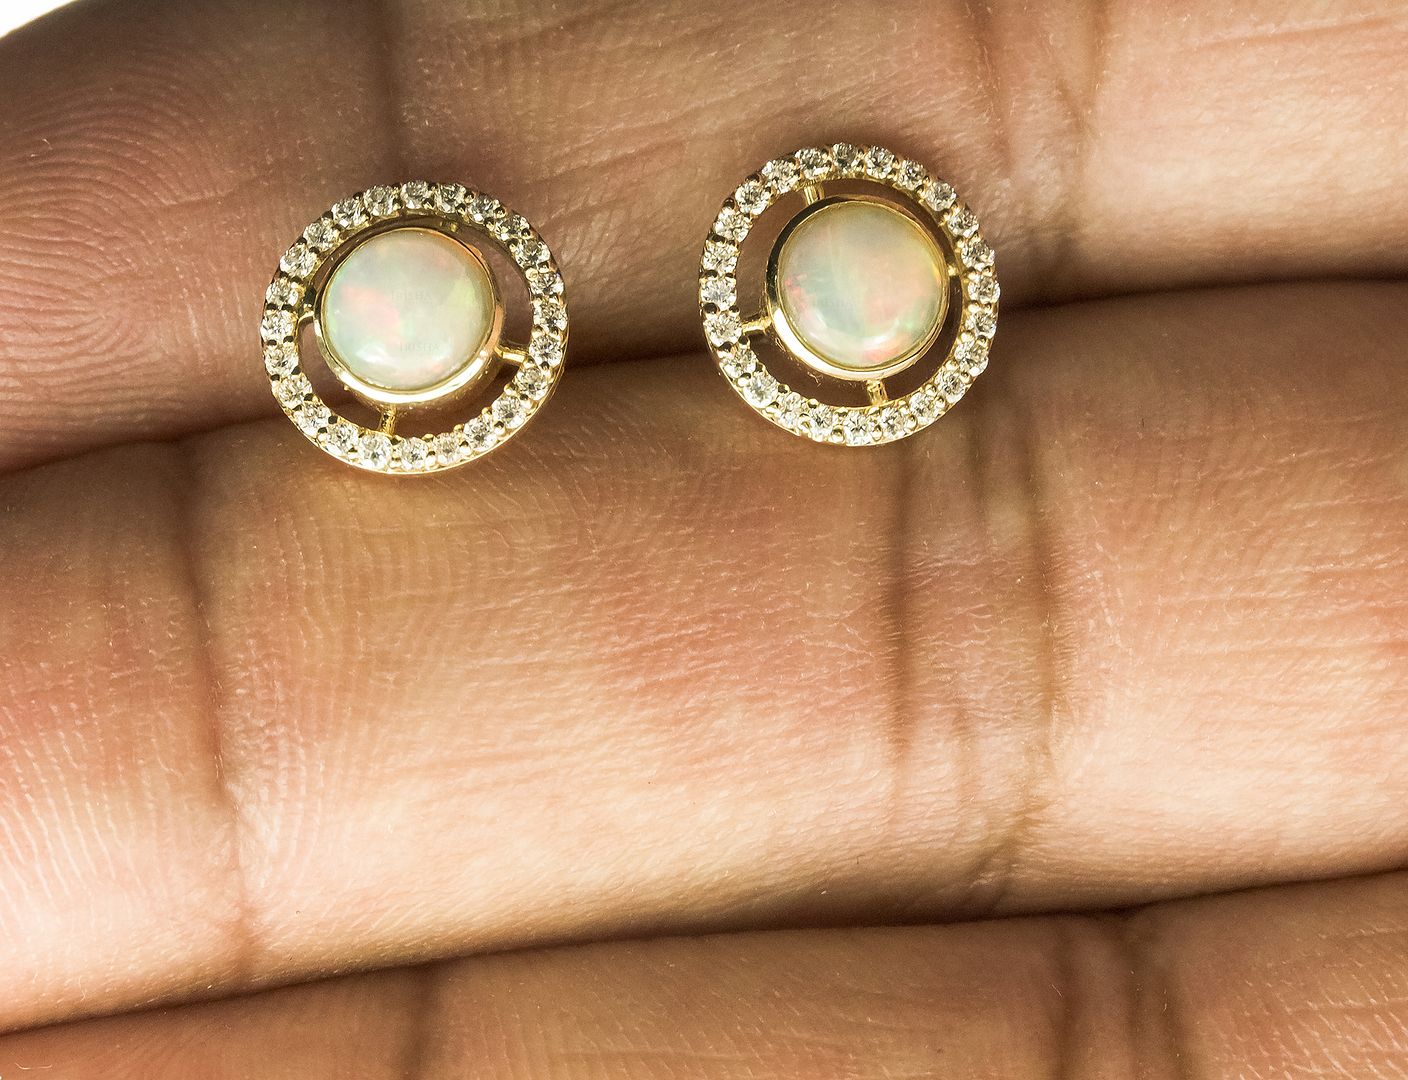 14K Gold Genuine Diamond And Opal Gemstone Studs Earrings Jewelry - New Arrival